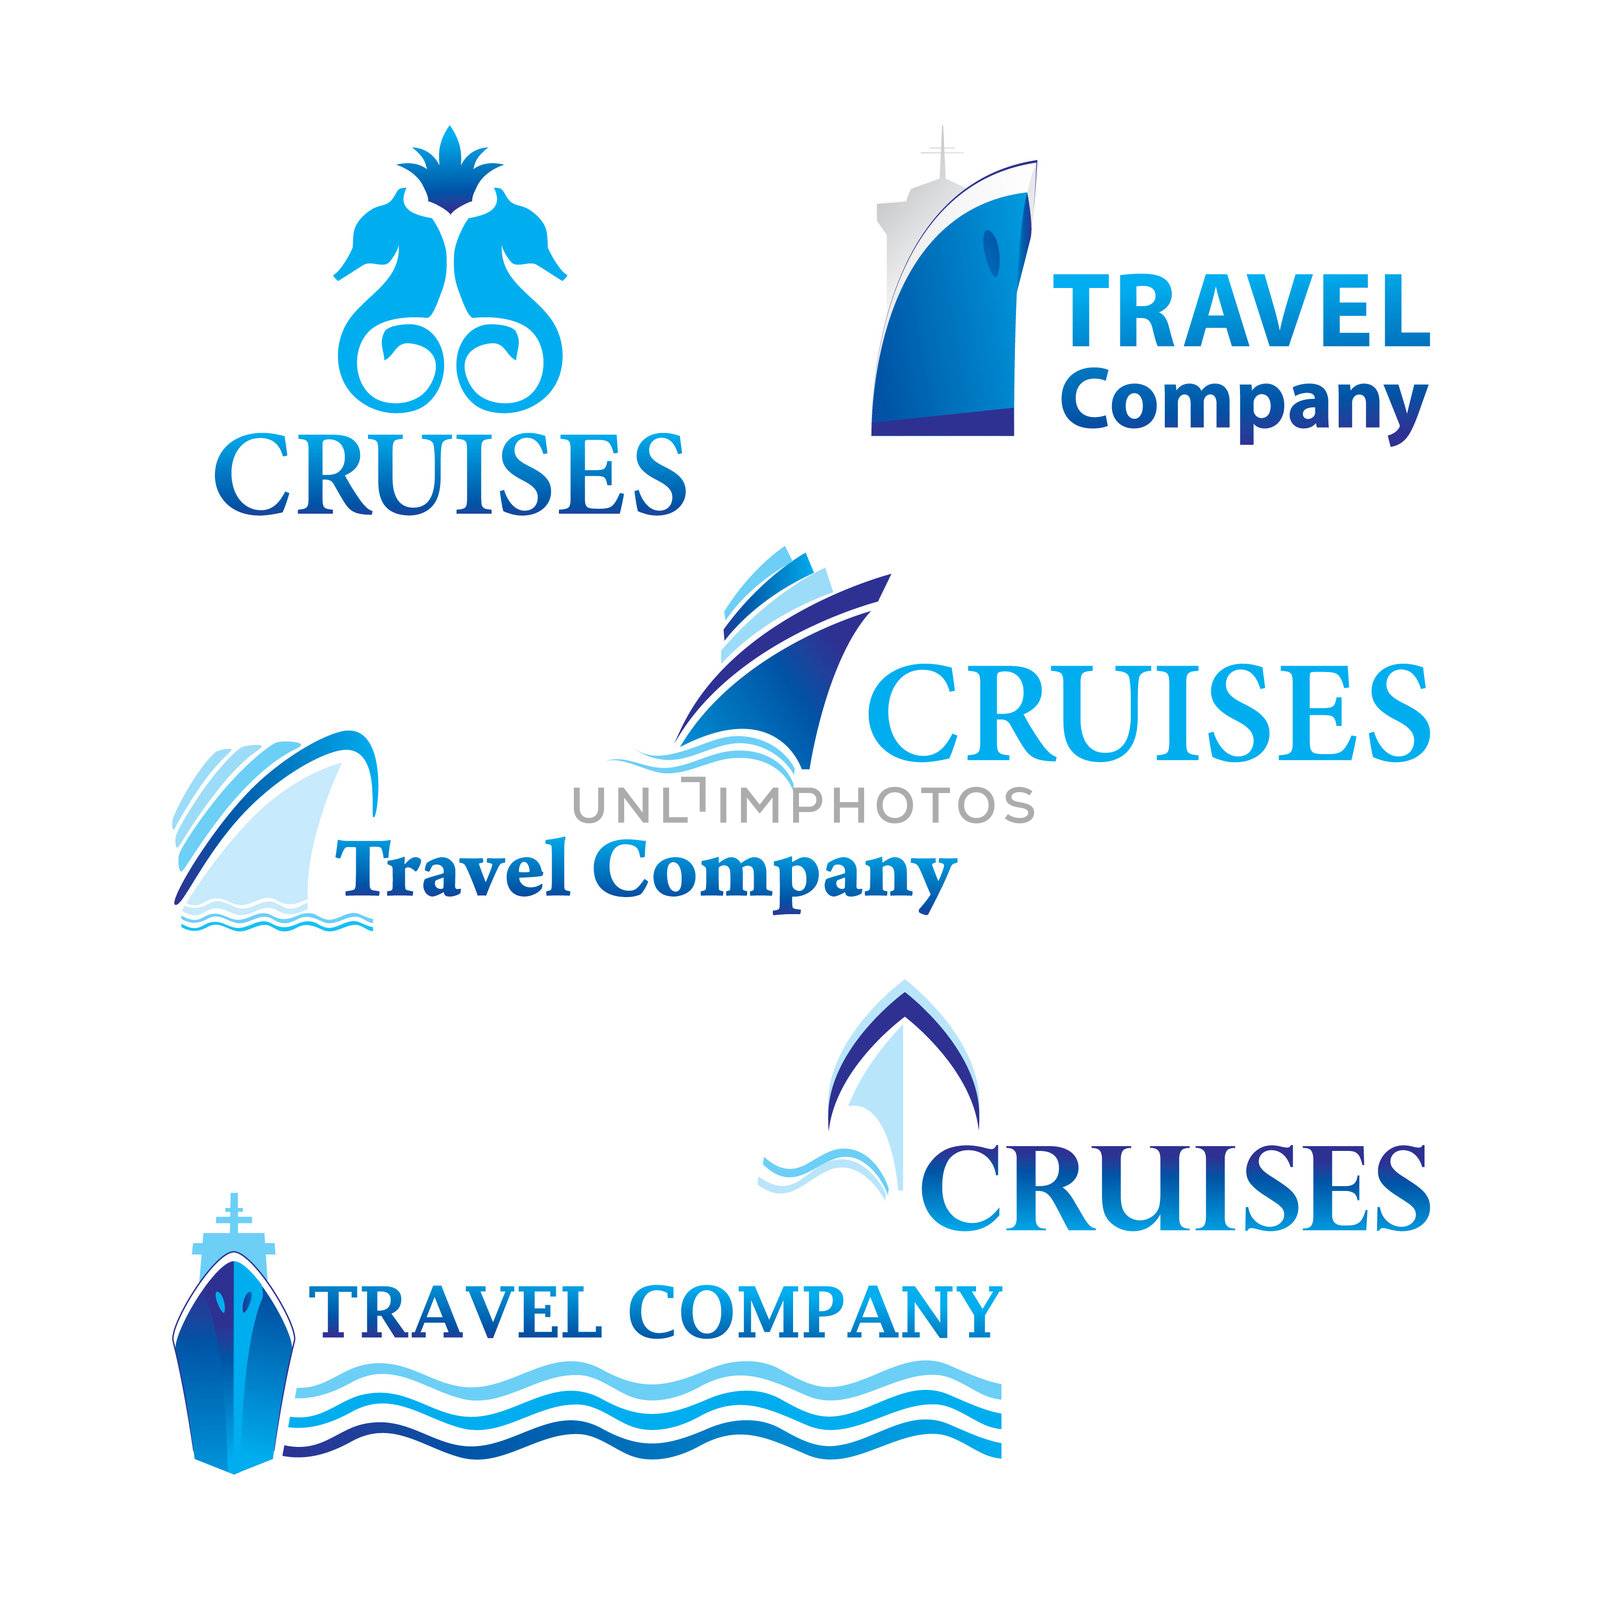 travel-cruises by antoshkaforever